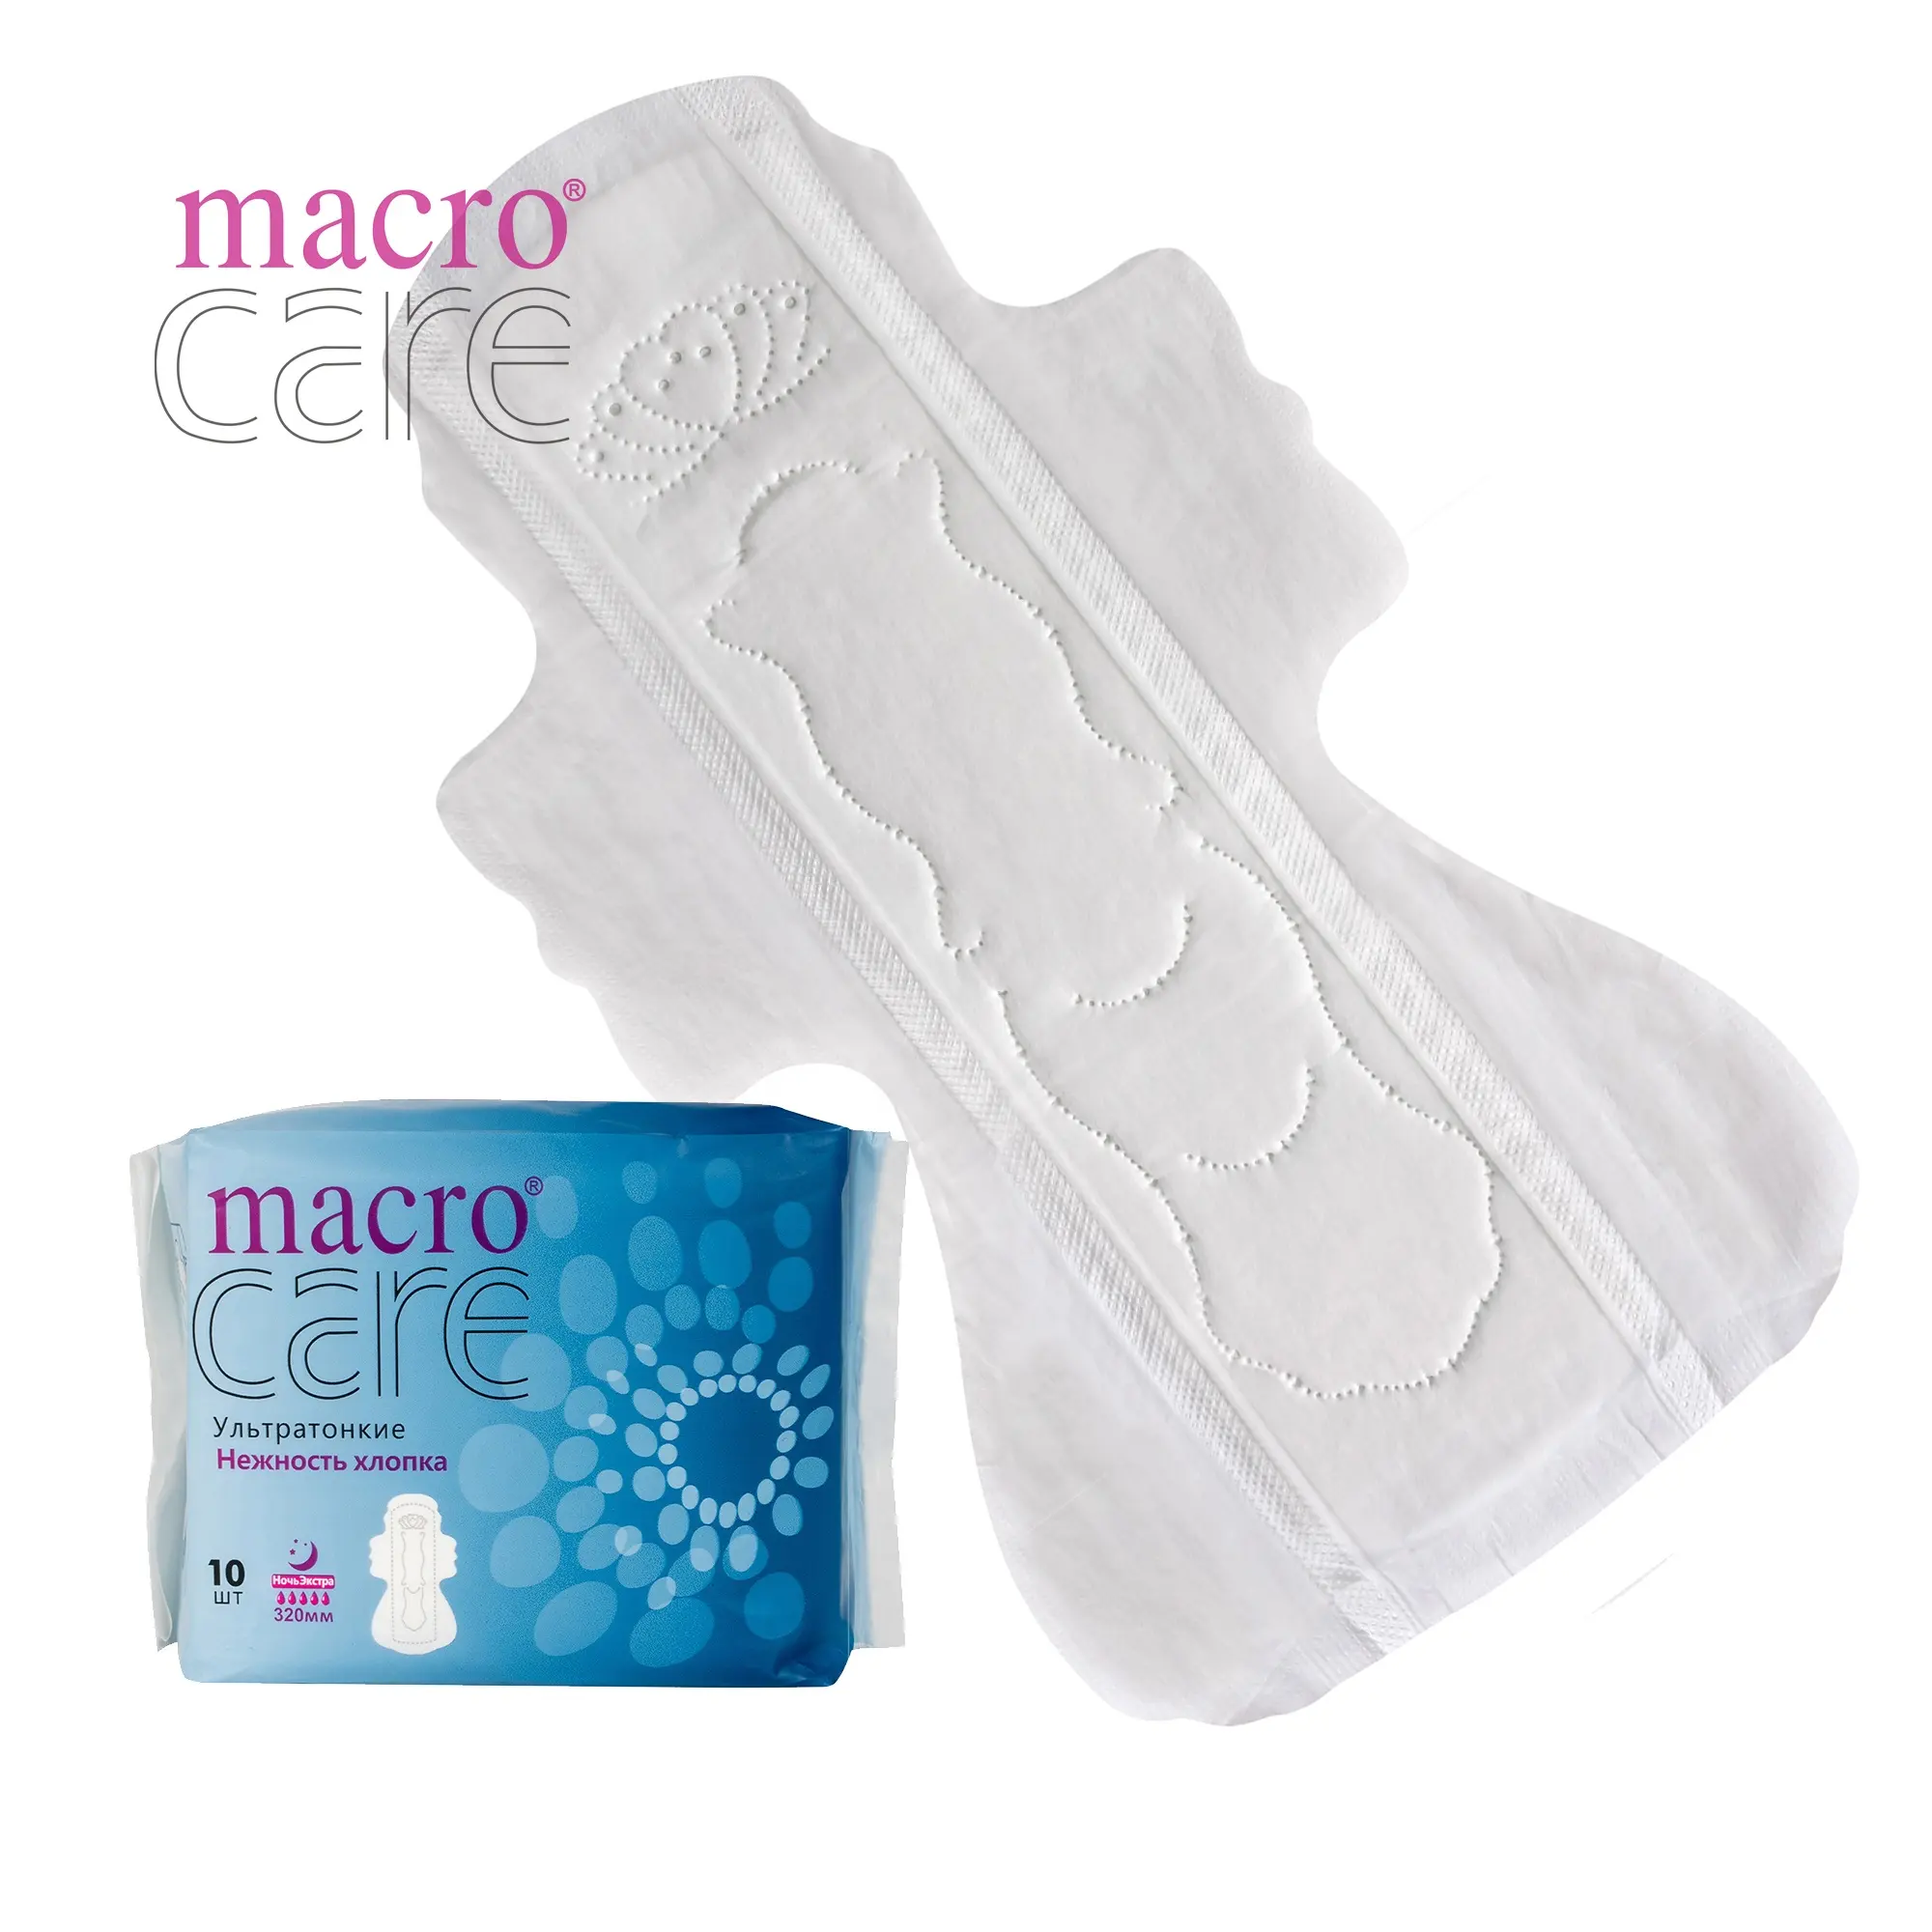 Macro care serviette hygienique femme sanitary pads for women oem manufacture